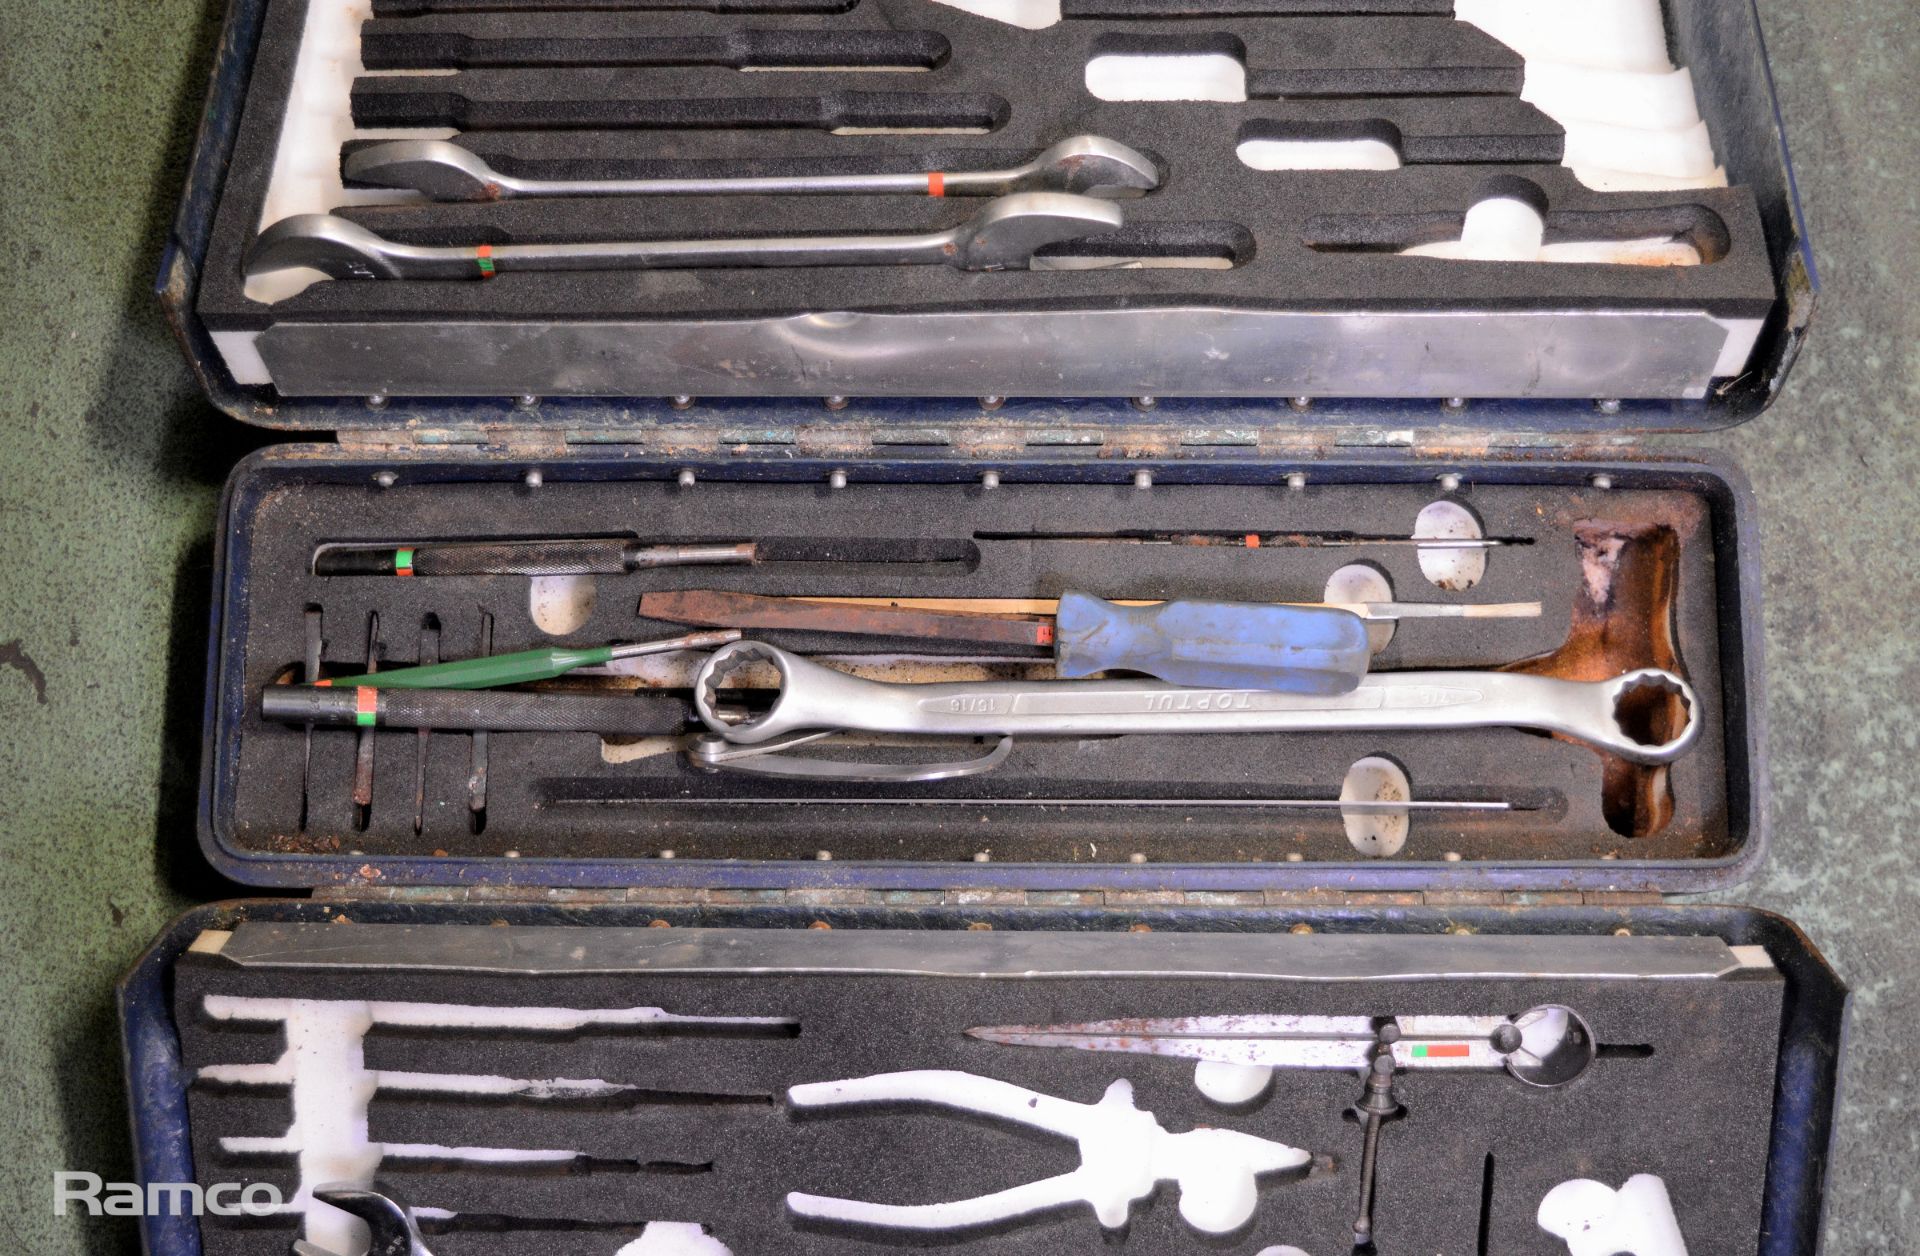 Blue Fiberglass tool box L52 x W16 x H40cm - Incomplete - Image 3 of 5